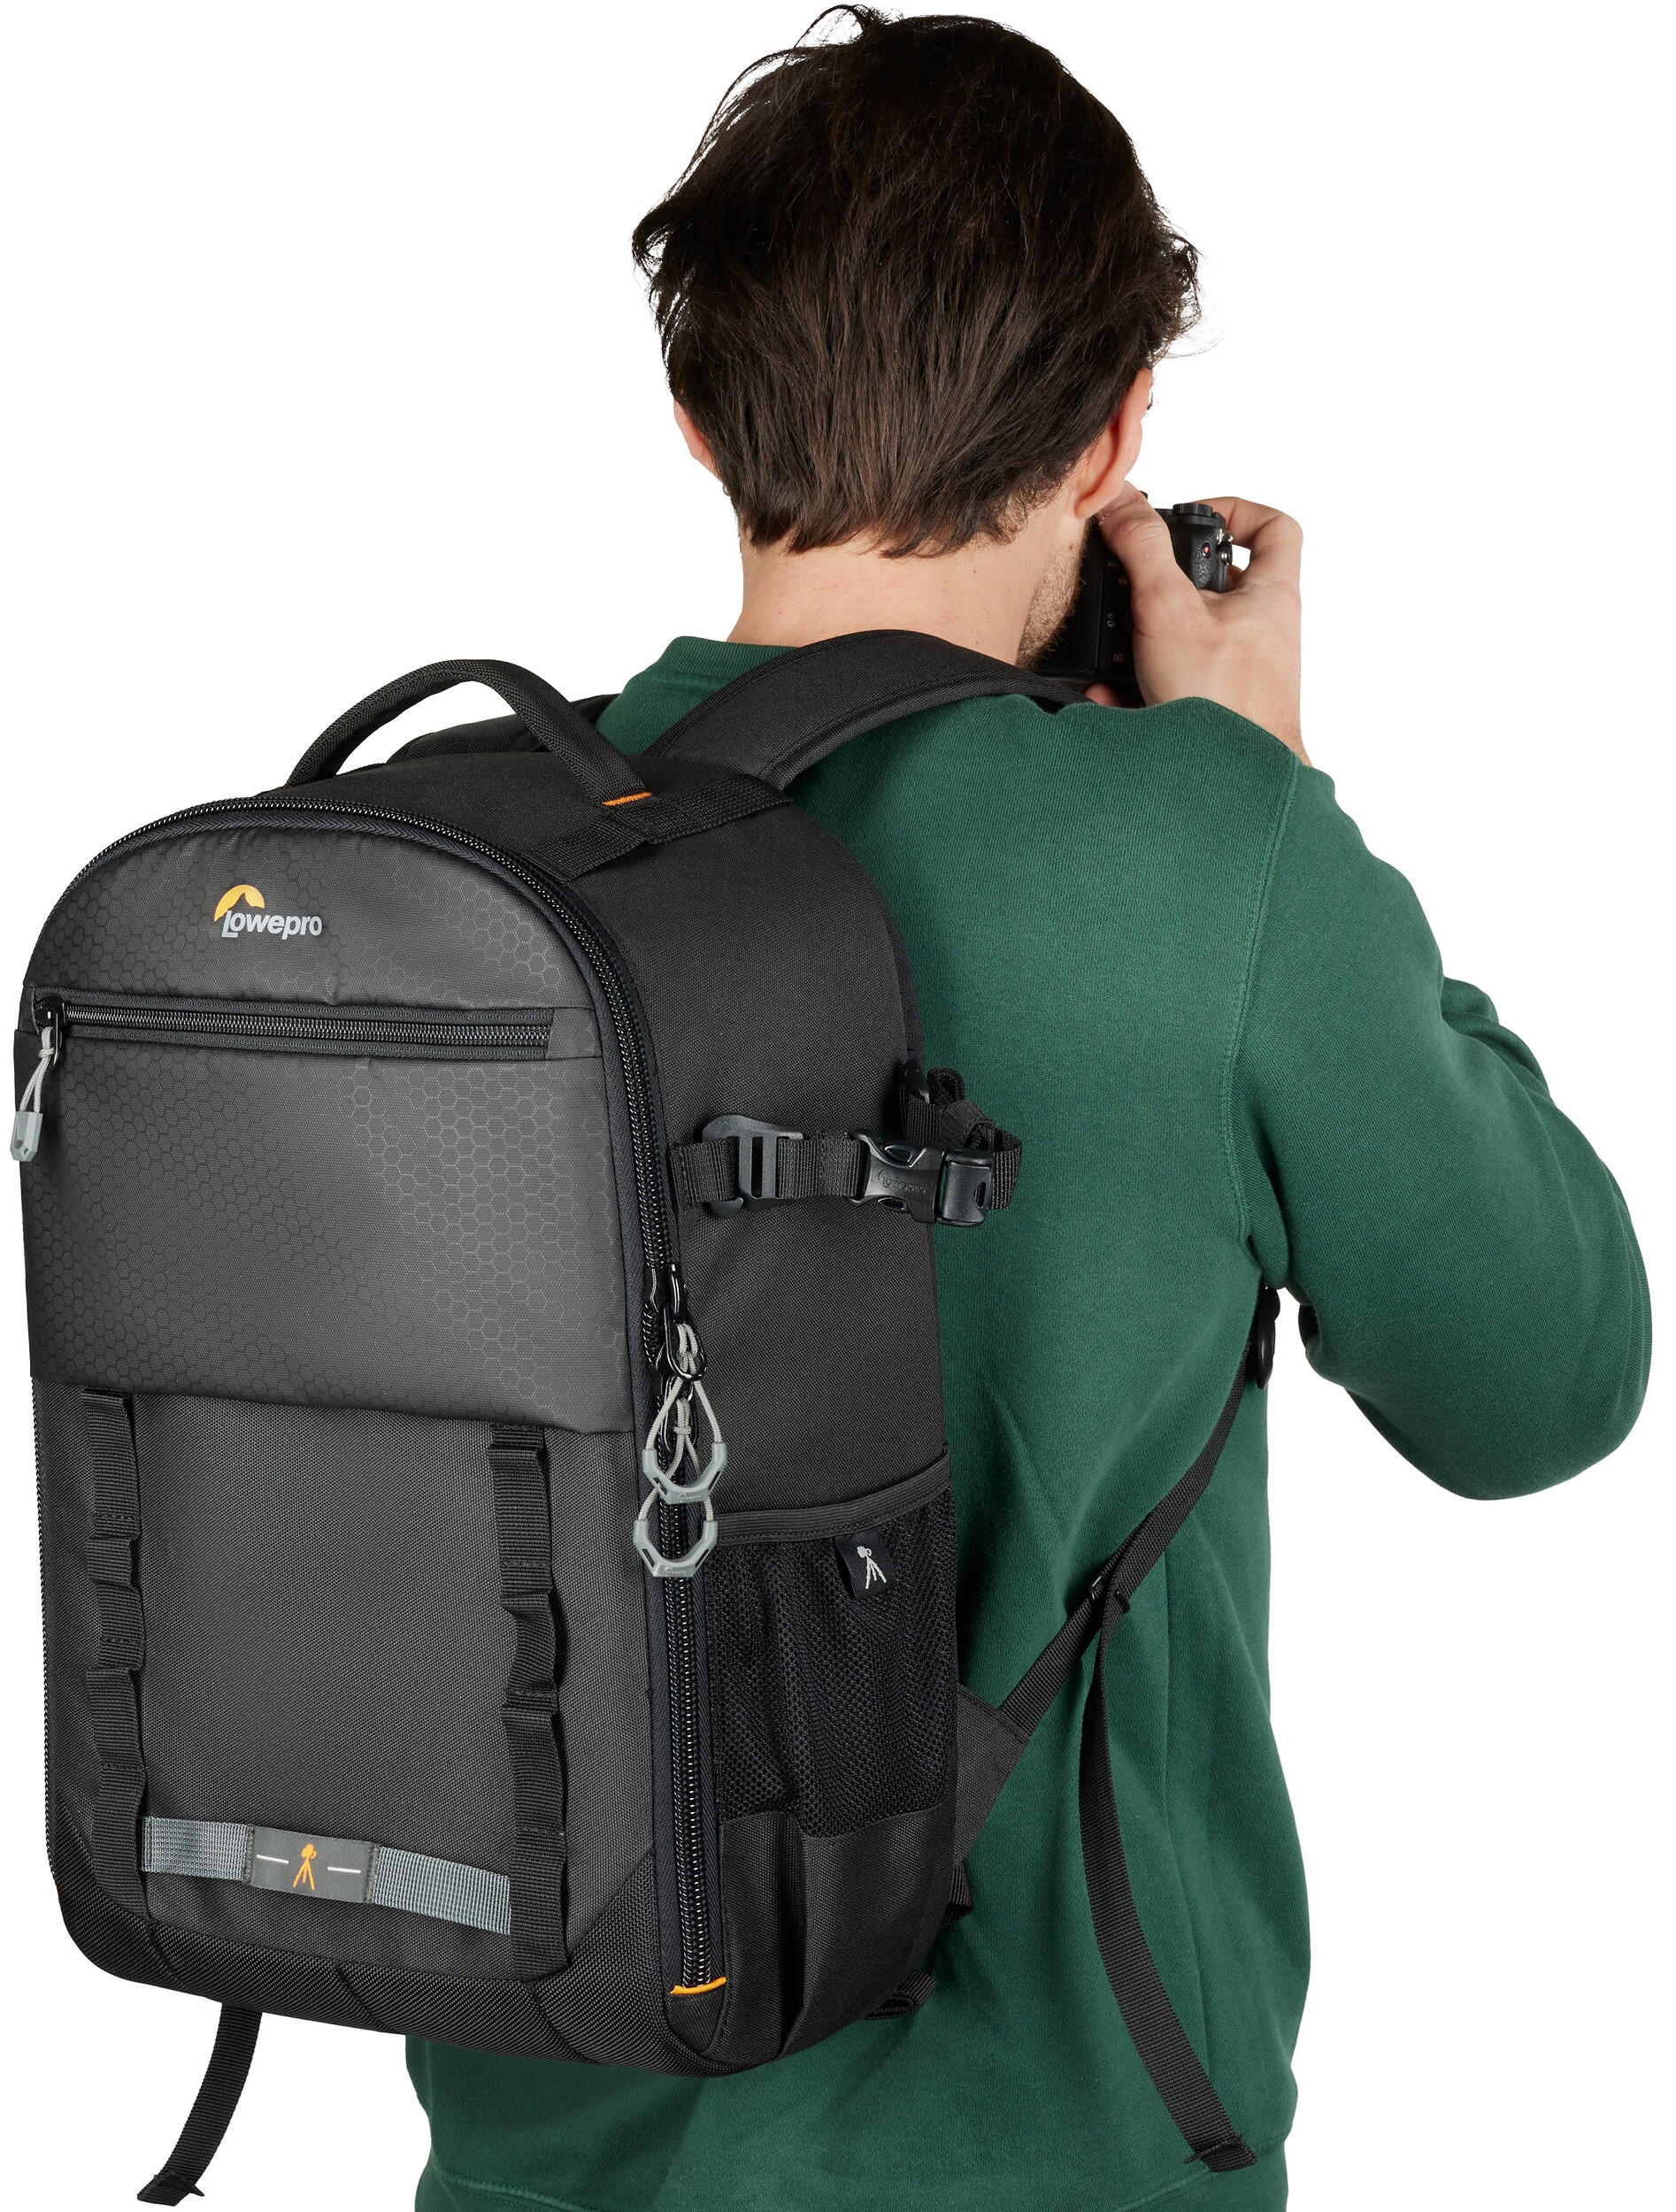    Backpack Lowepro Adventura 300 III Black